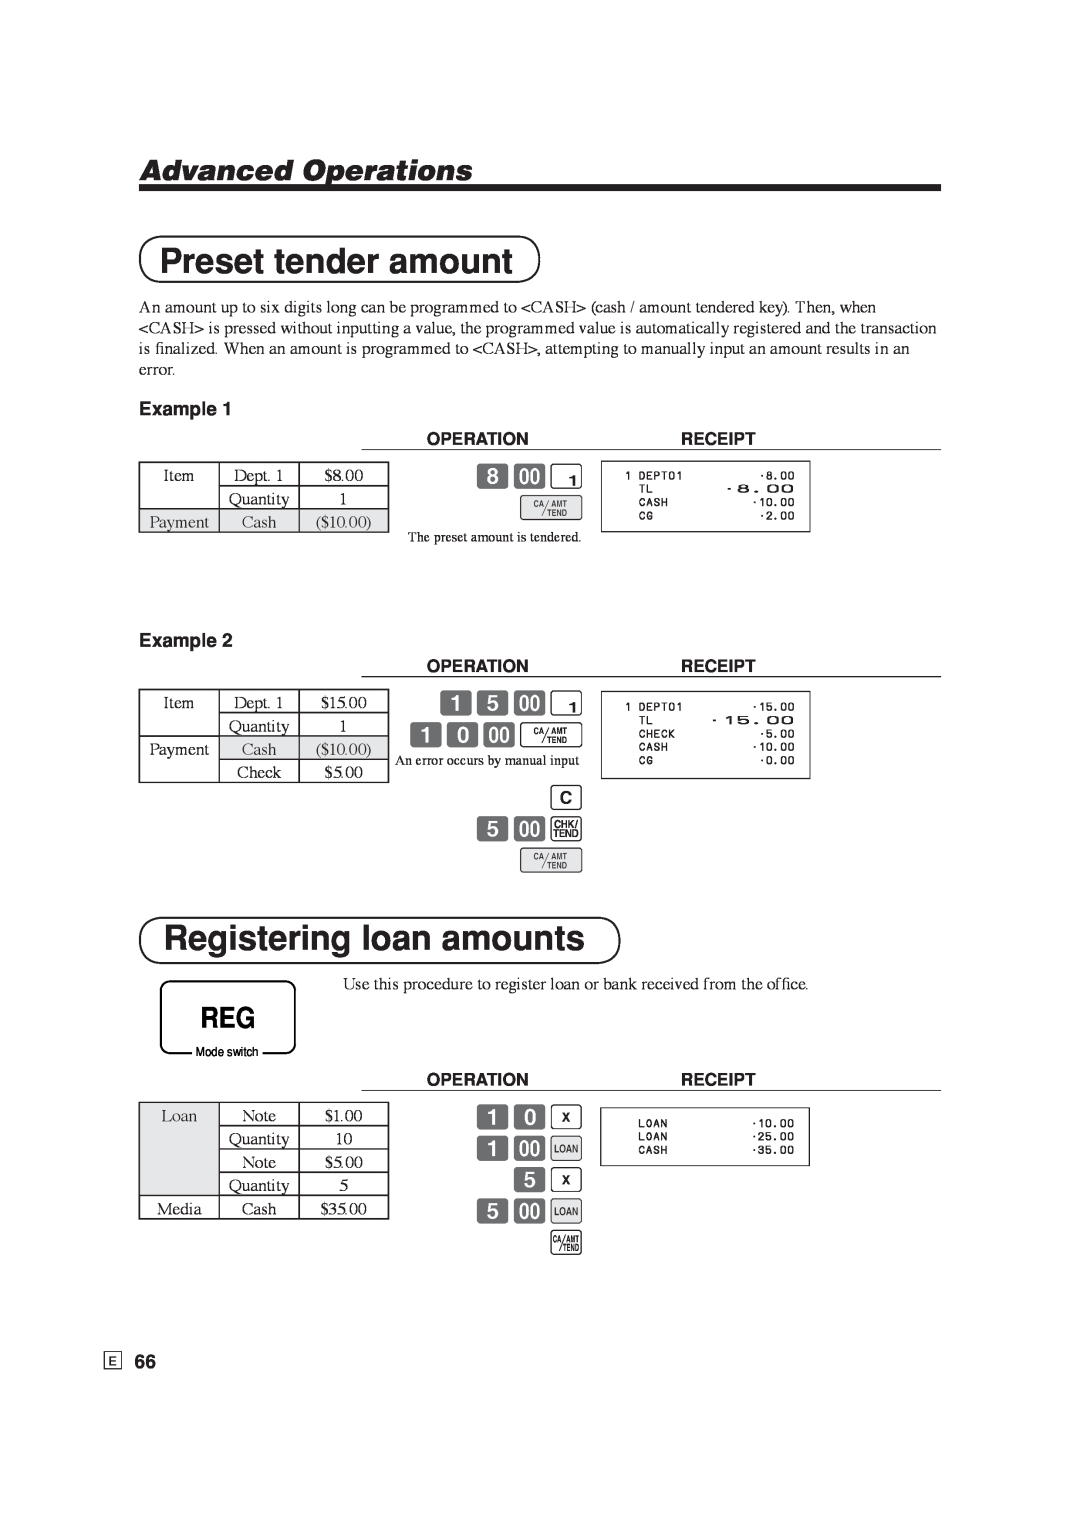 Casio SE-S6000 Preset tender amount, Registering loan amounts, C 5-k F, 5-l a, Advanced Operations, 10-F, Example 